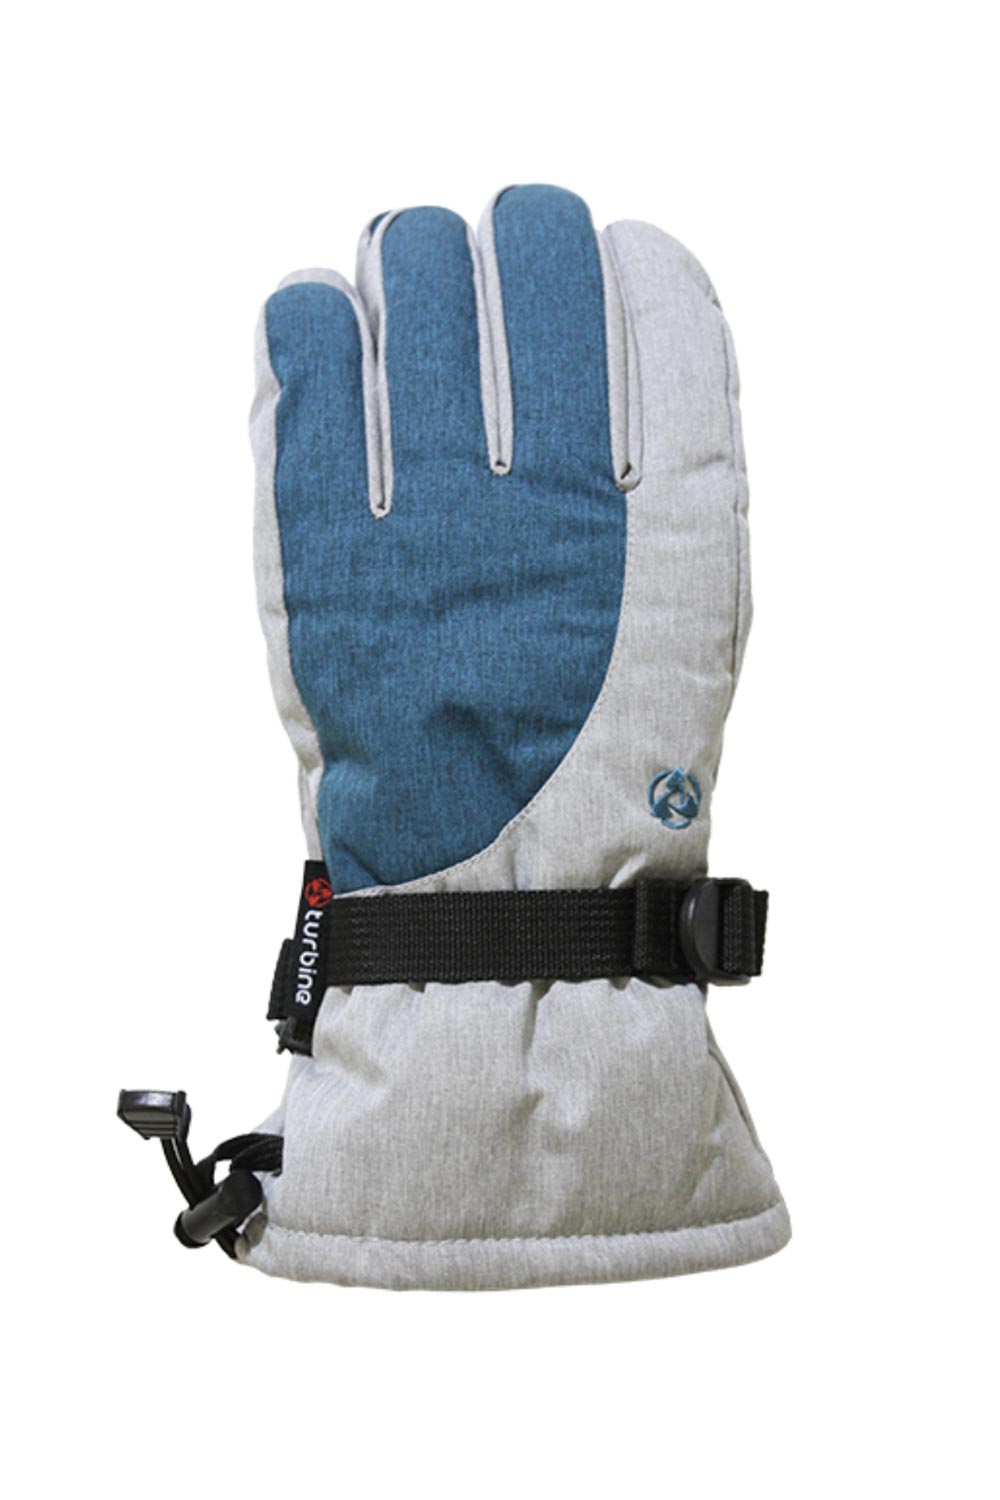 Turbine ski gloves, gray and blue